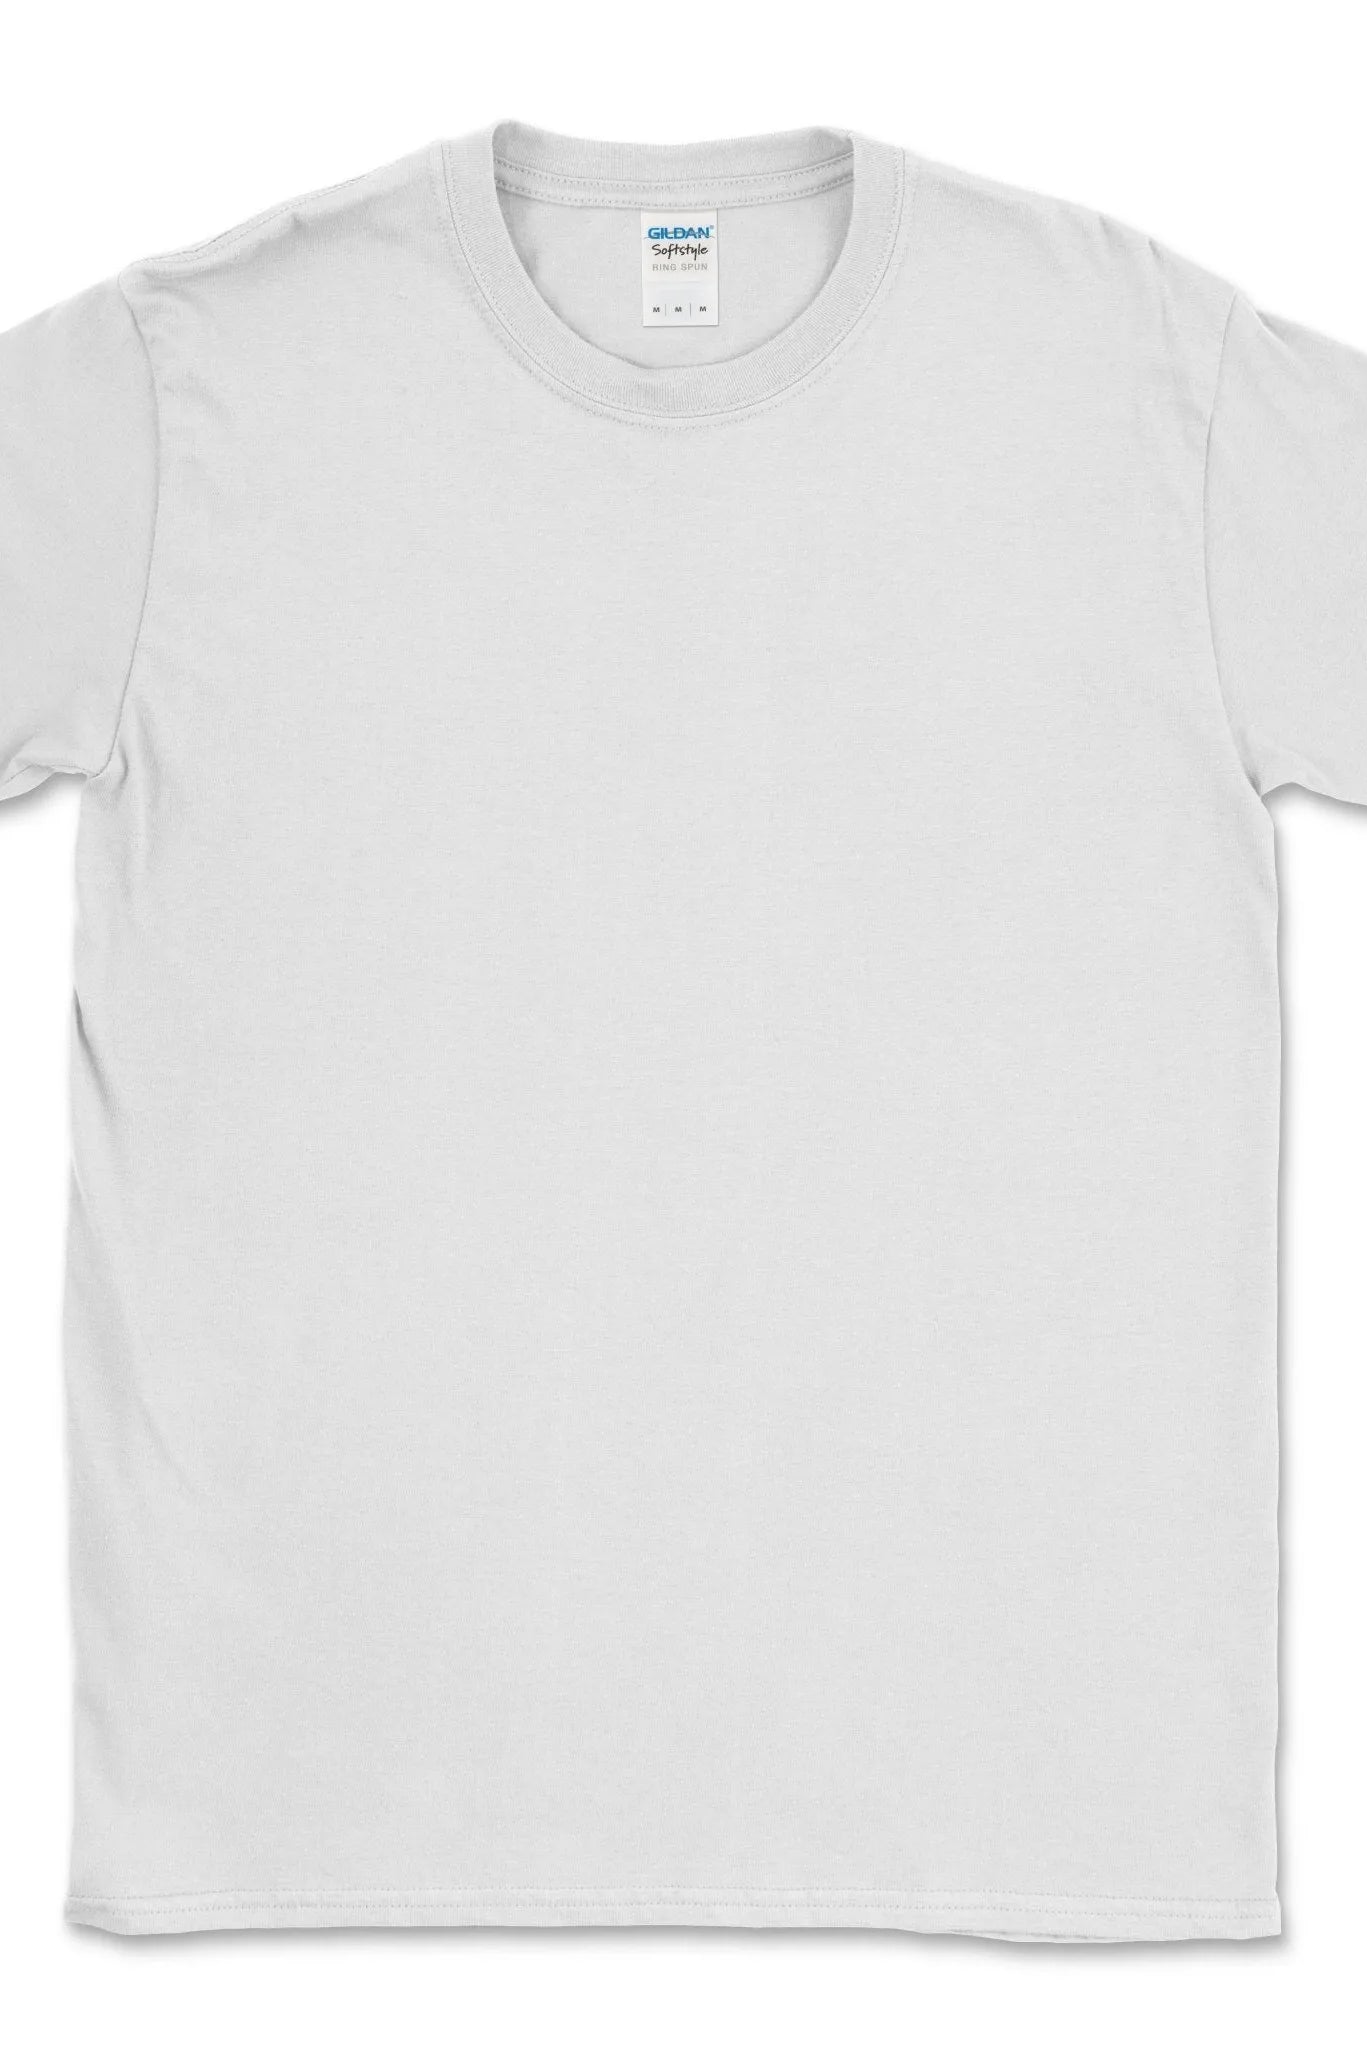 BYOG - Bring Your Own Garments - Print Me Shirts